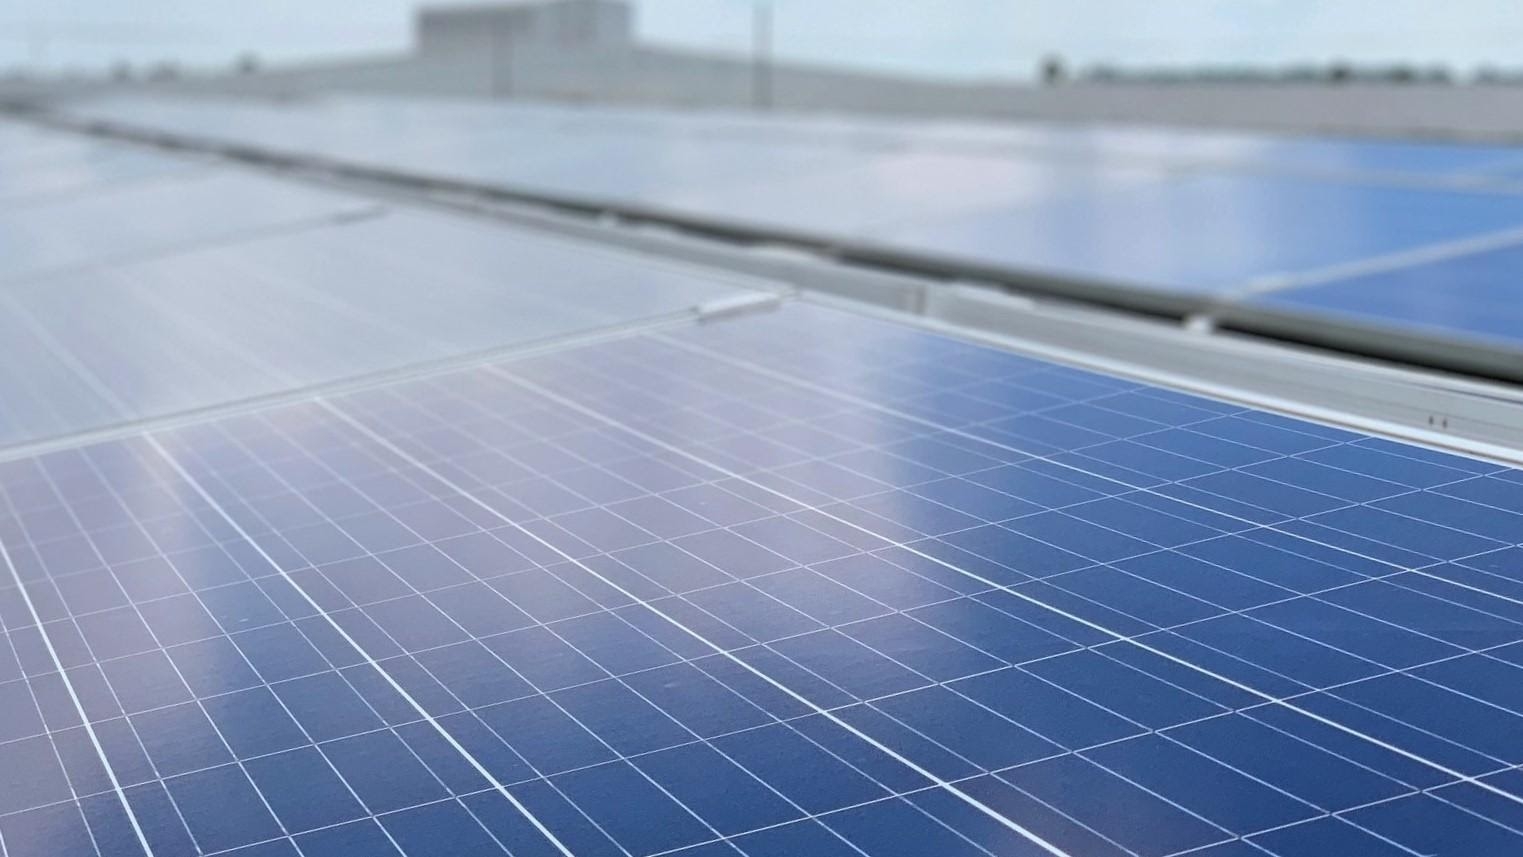 Cleantech Solar Tawarkan Proyek Energi Tenaga surya Sebesar 4,5 Megawatt